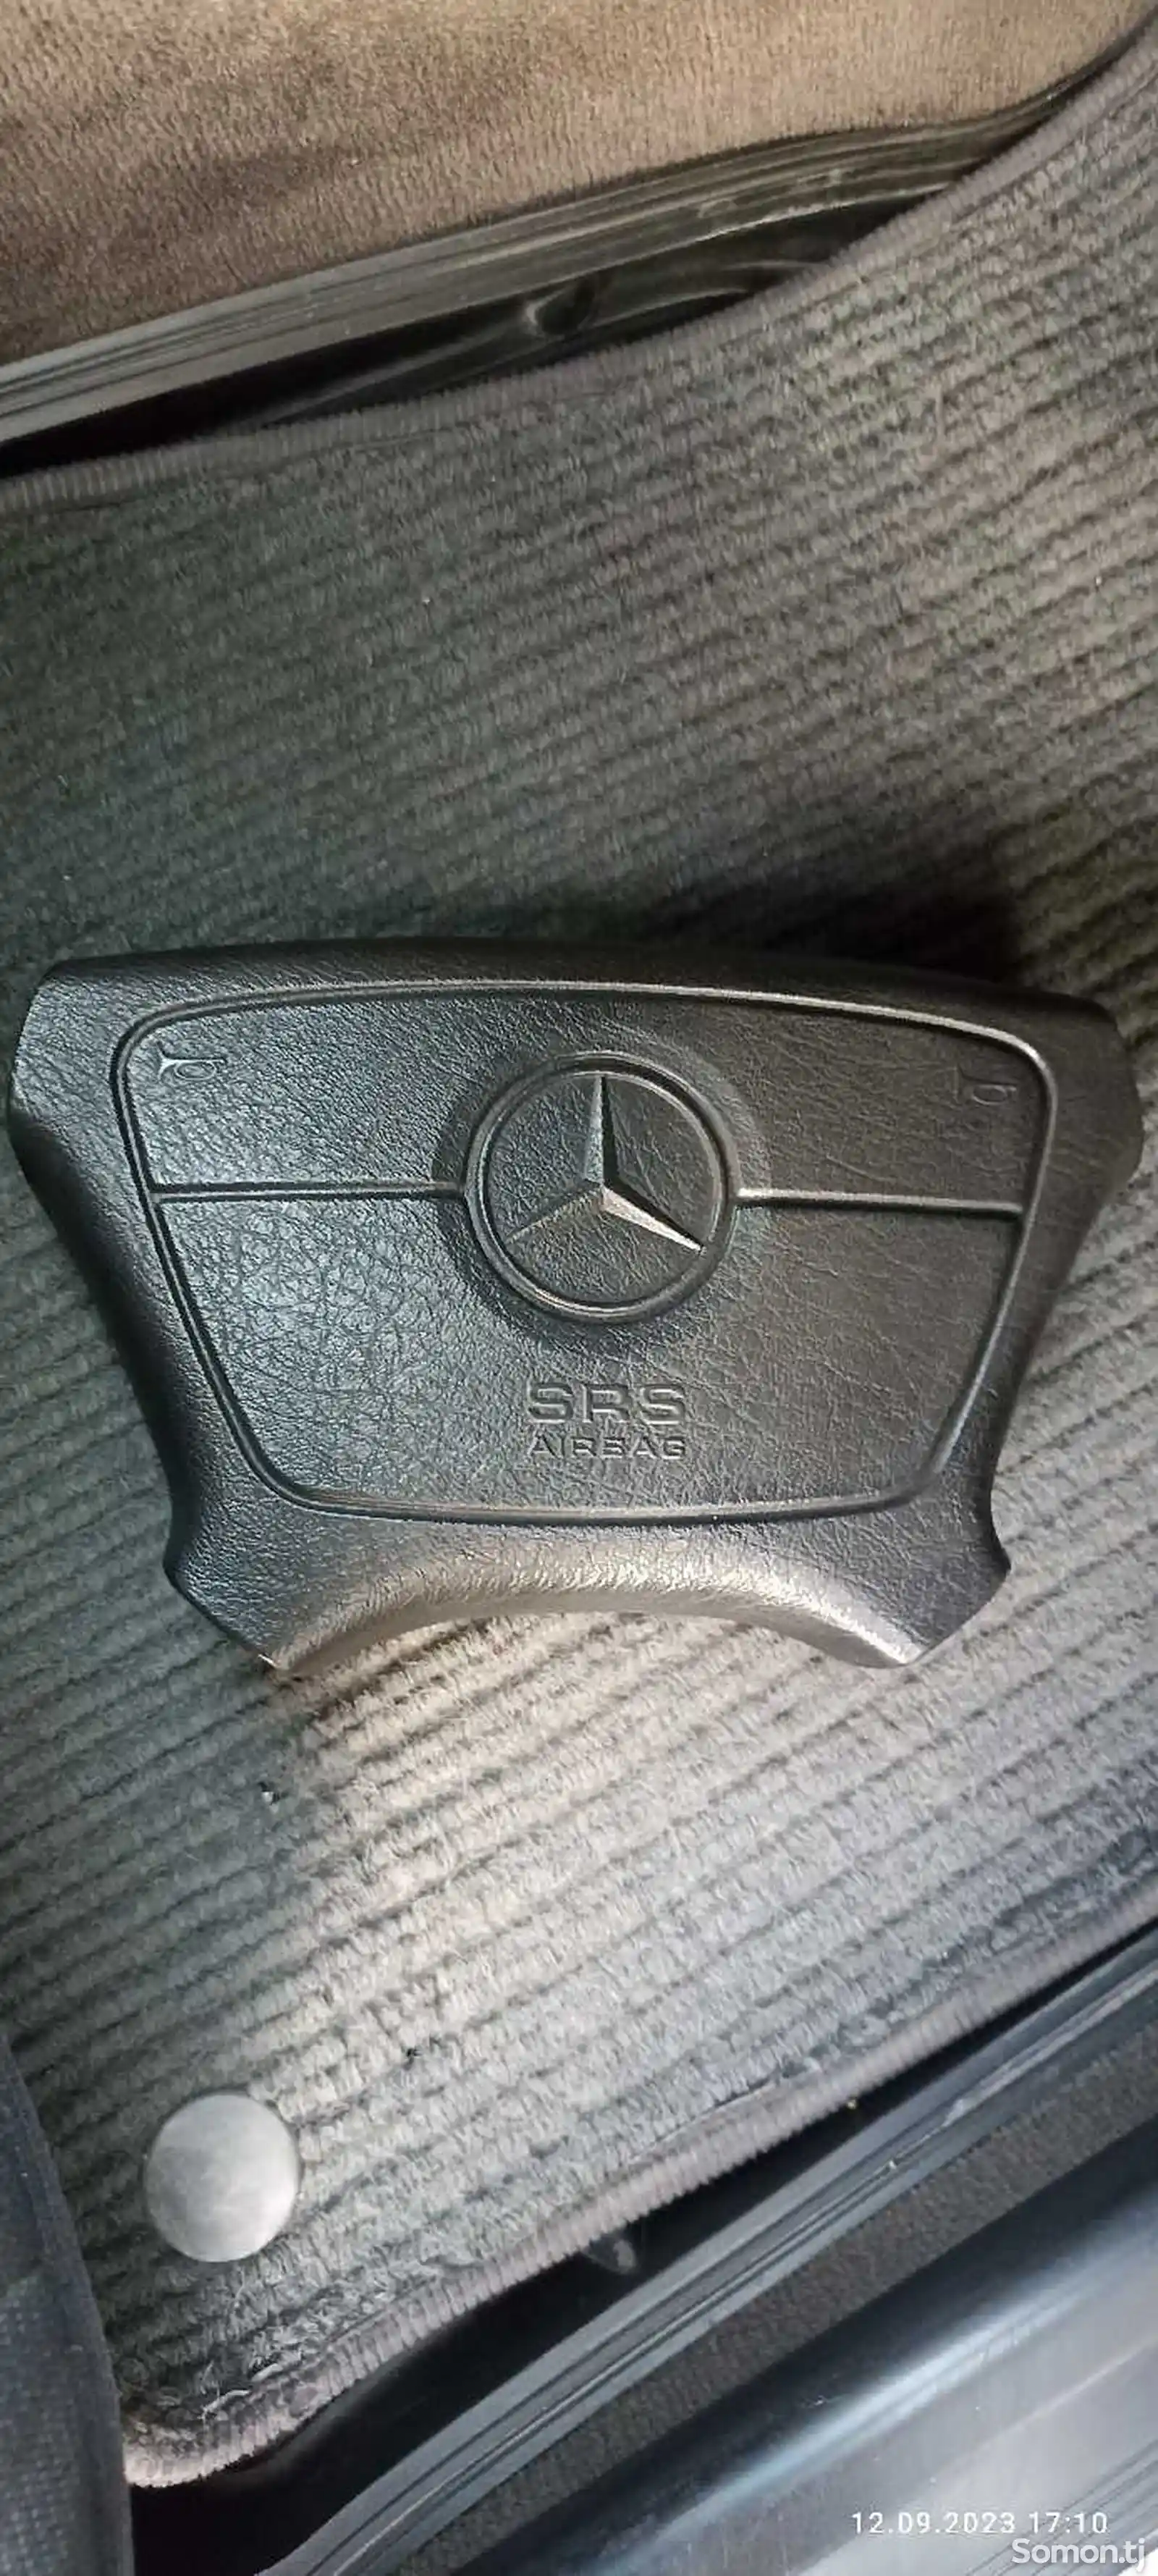 Аэробак на Mercedes-Benz-2